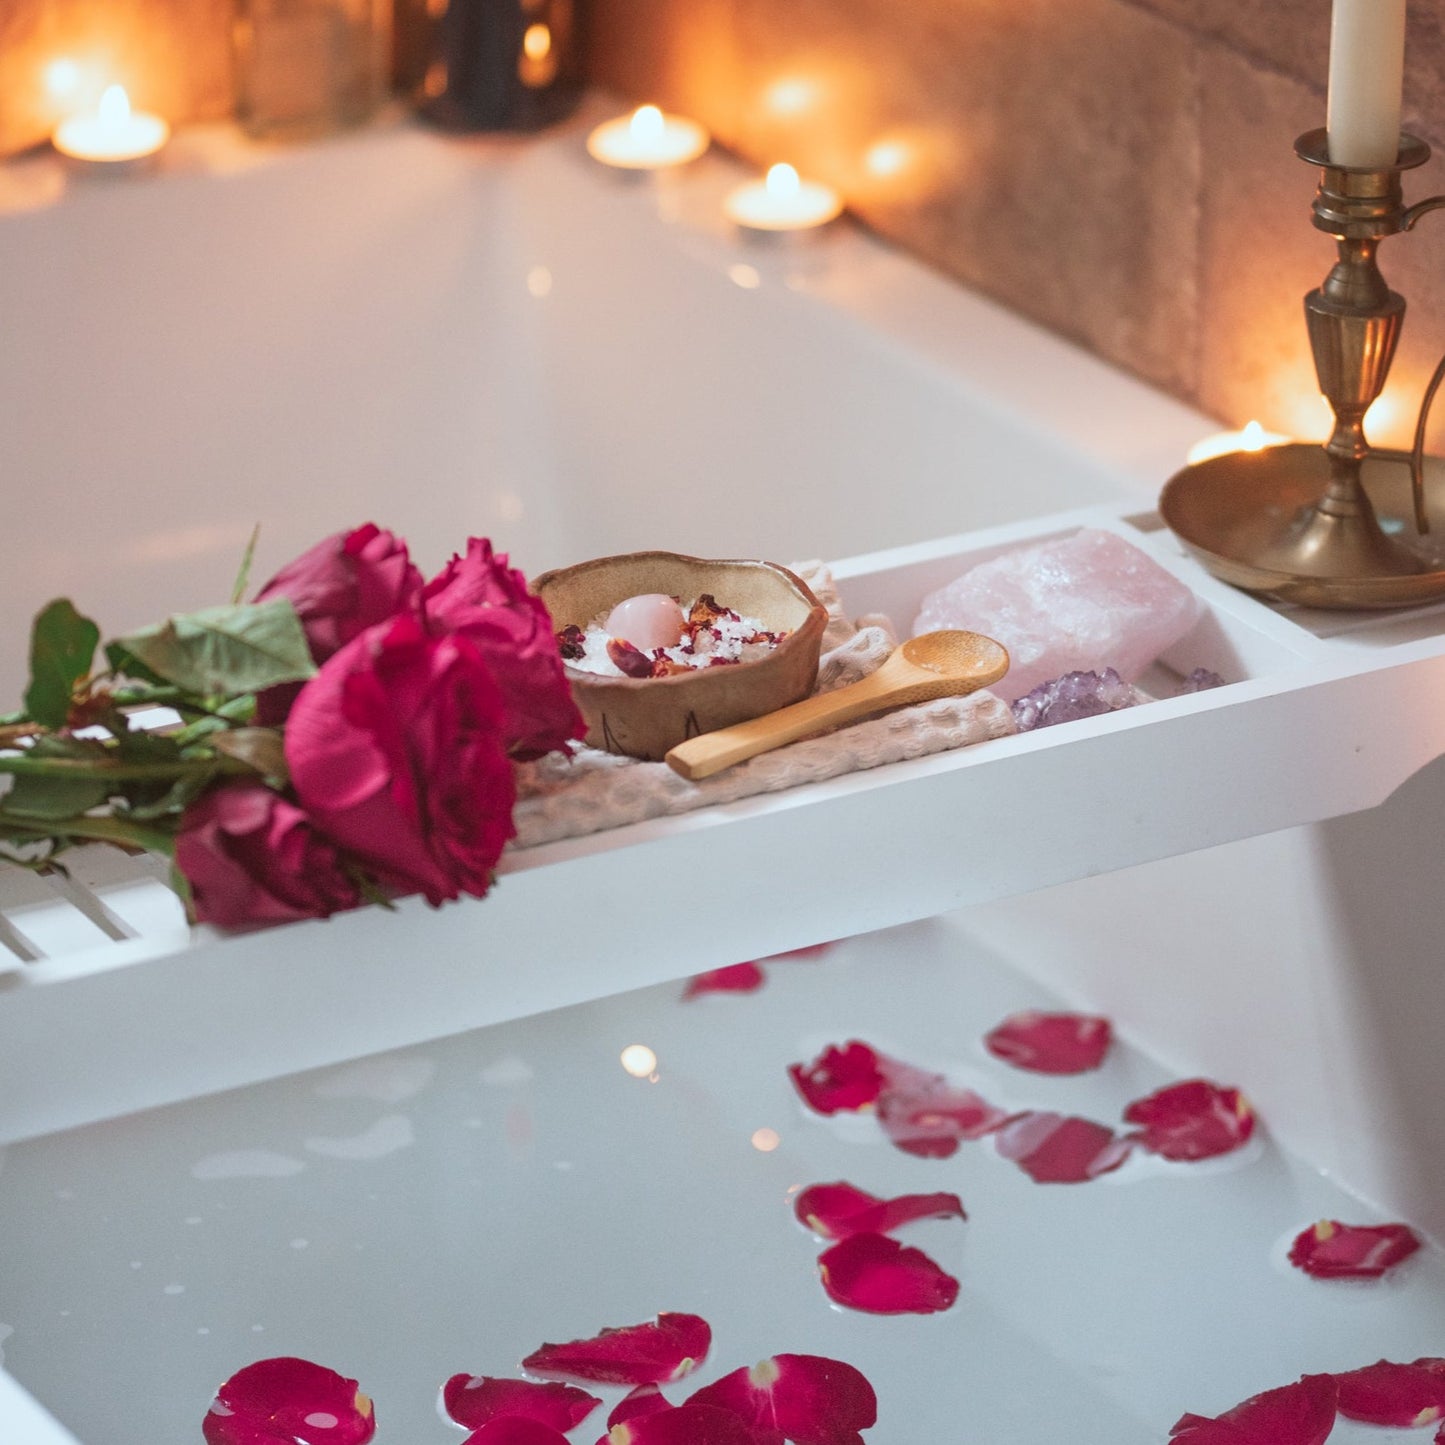 Rose Quartz Rose Geranium Crystal Bath Soak - Epsom Bath Salts for Love and Healing